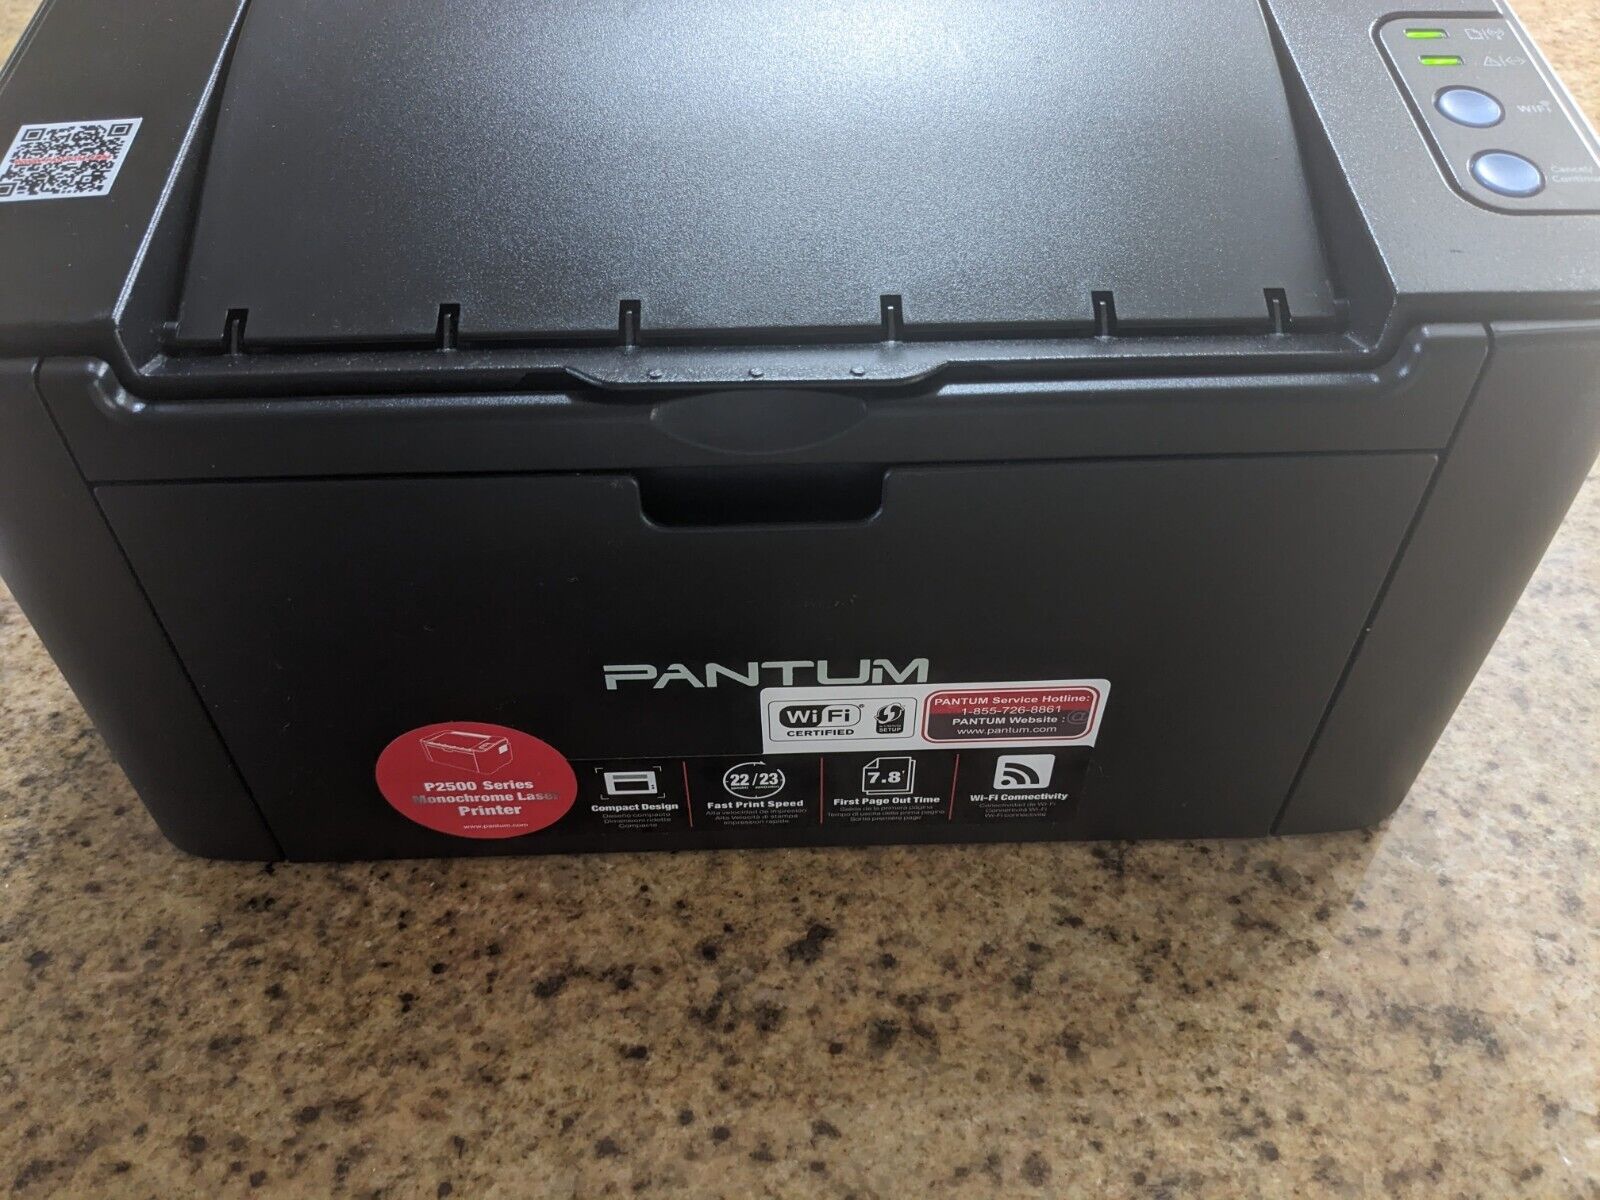 Pantum P2502W Wireless Laser Printer